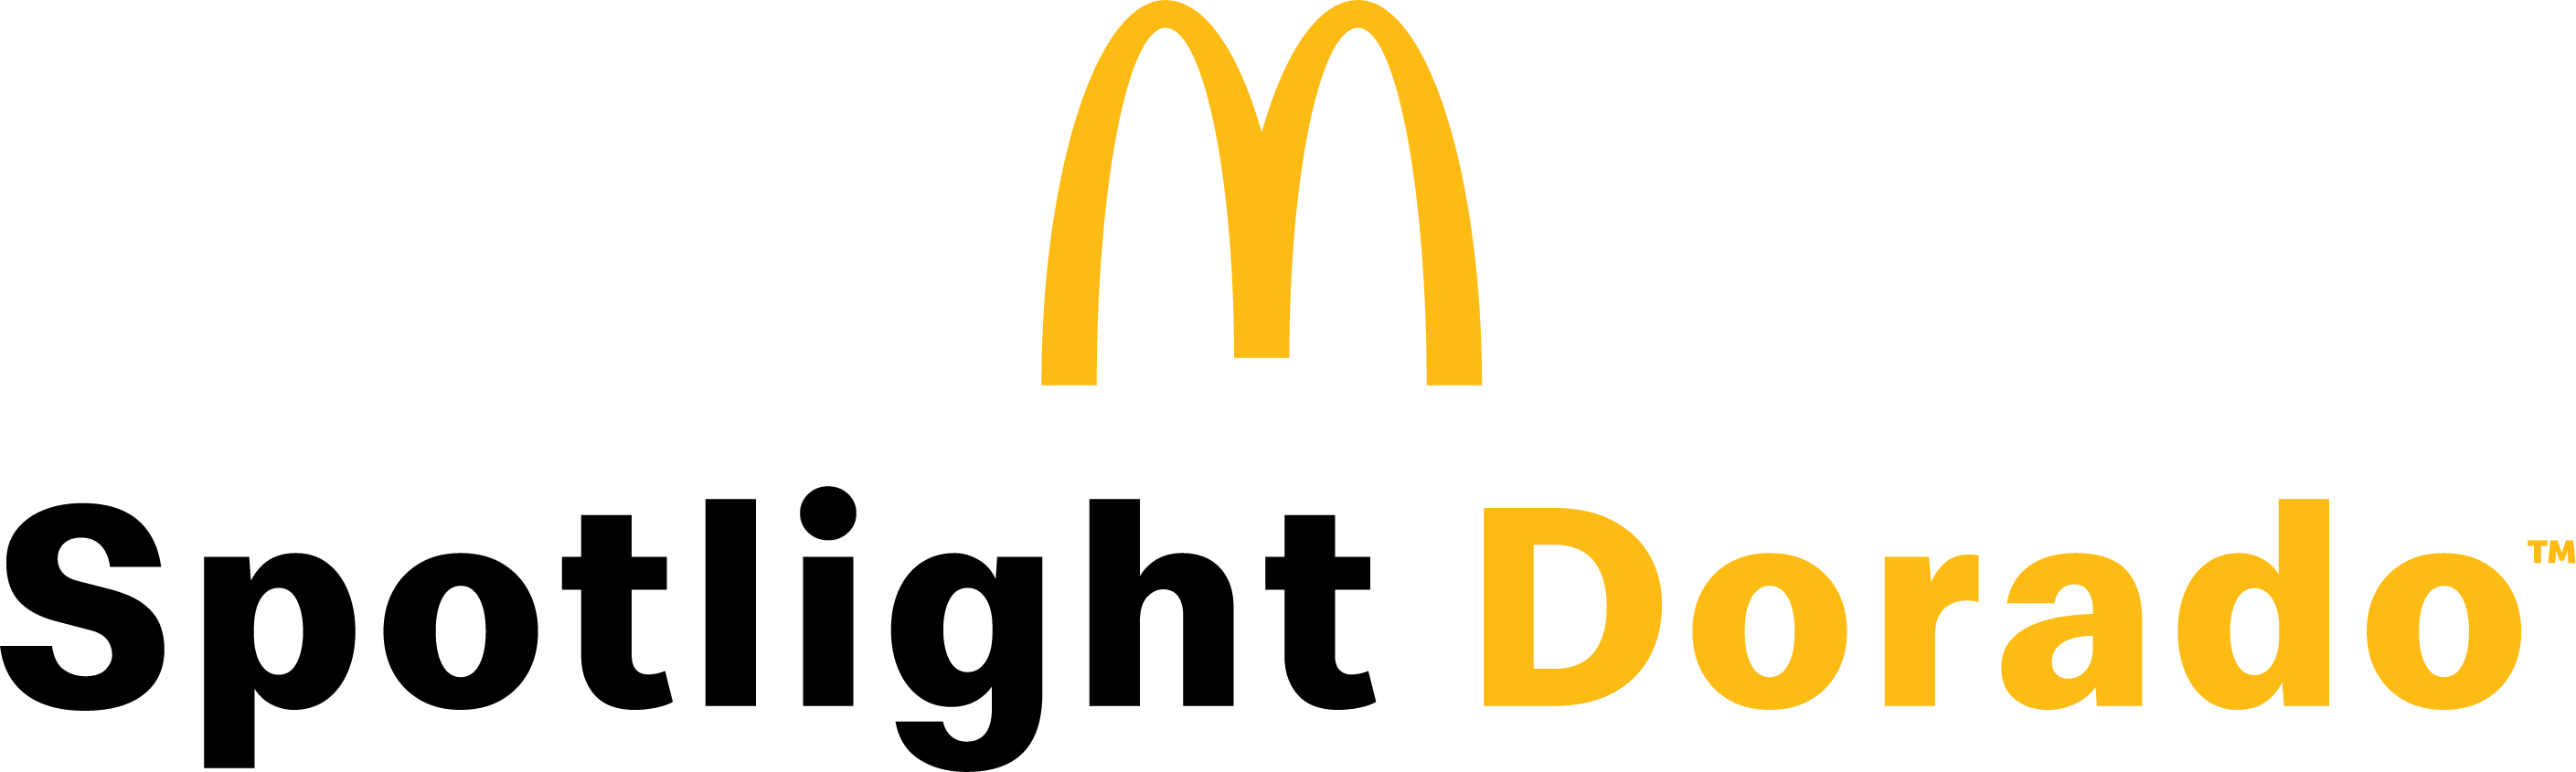 McDonalds Spotlight Dorado logo